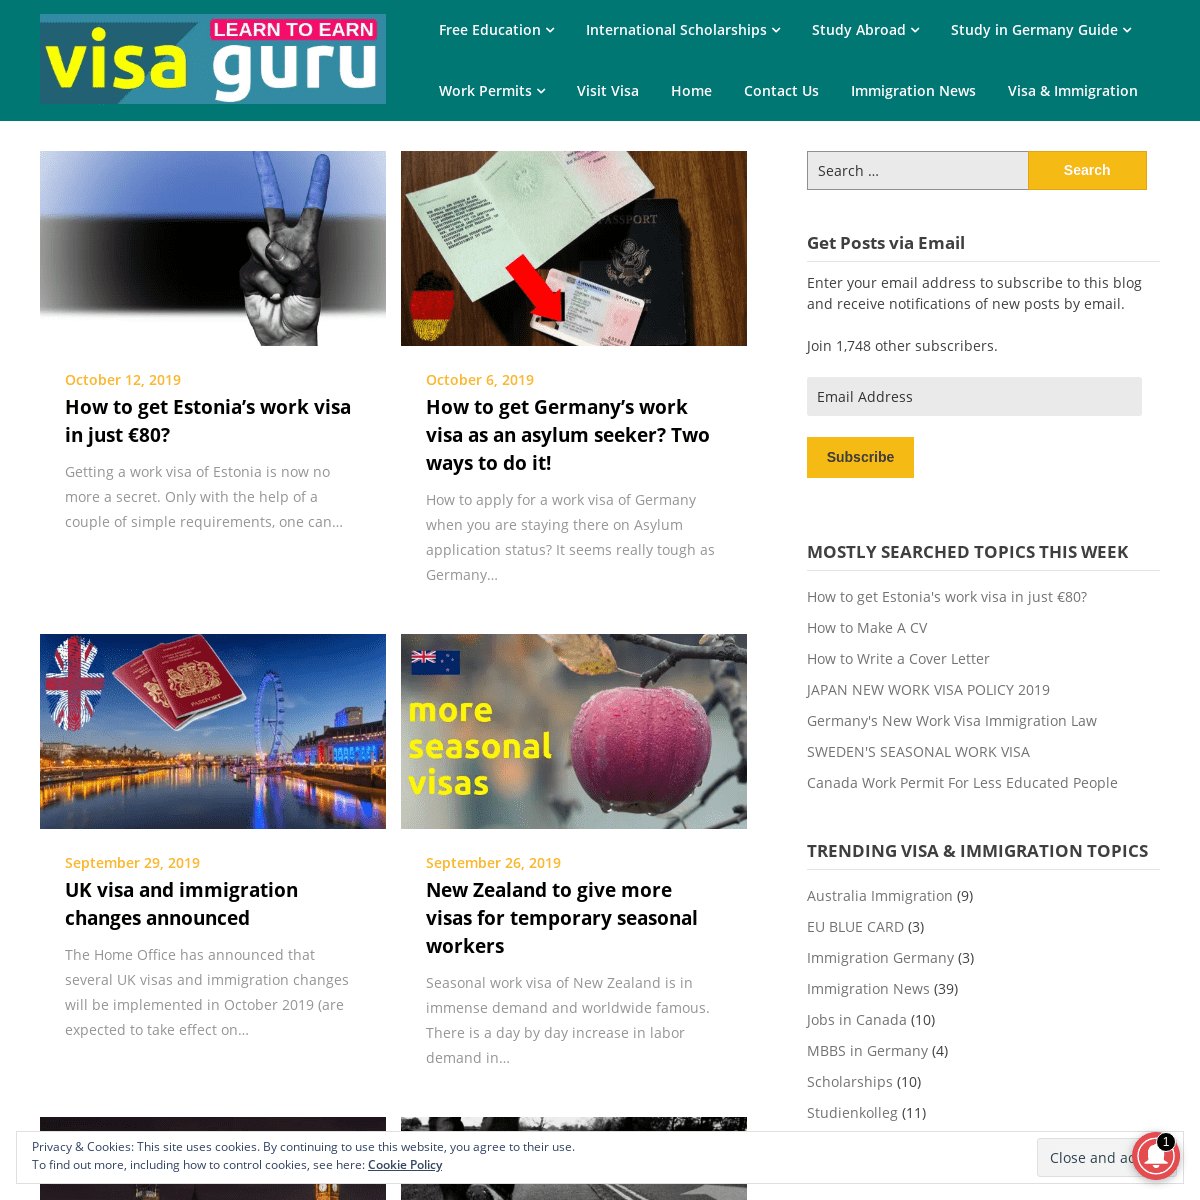 A complete backup of visa-guru.com